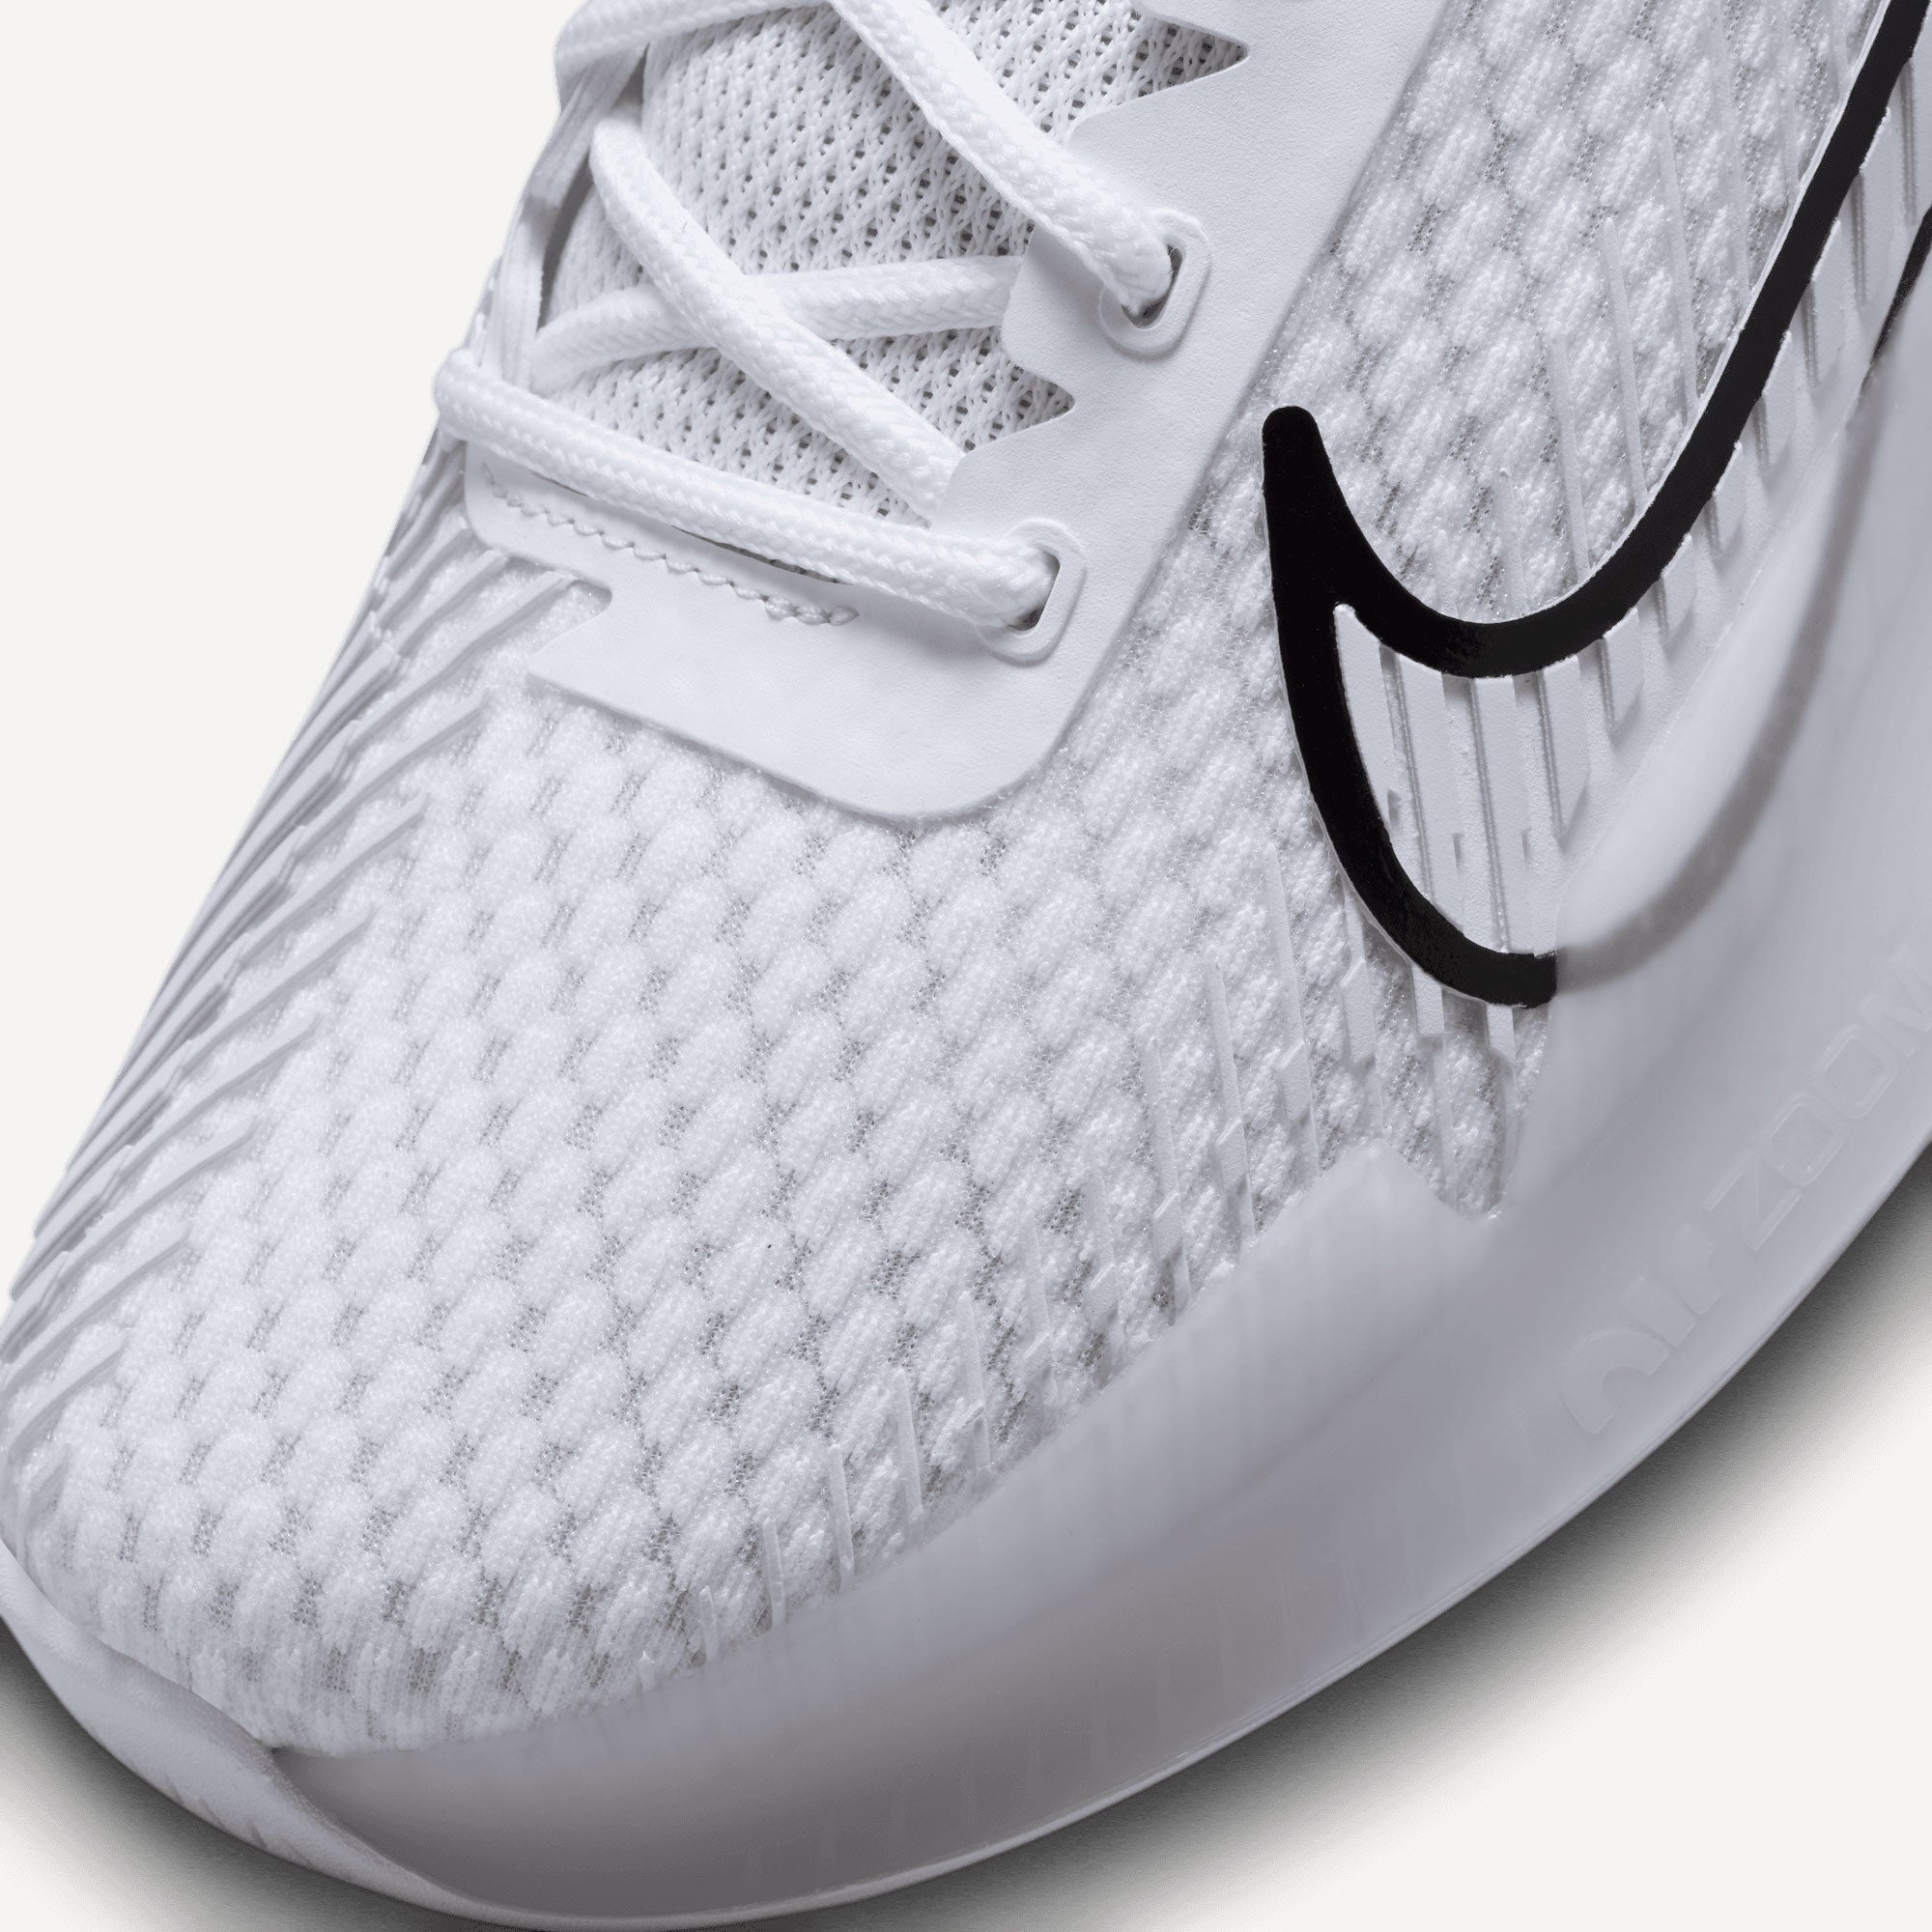 NikeCourt Air Zoom Vapor 11 Women's Hard Court Tennis Shoes White (7)